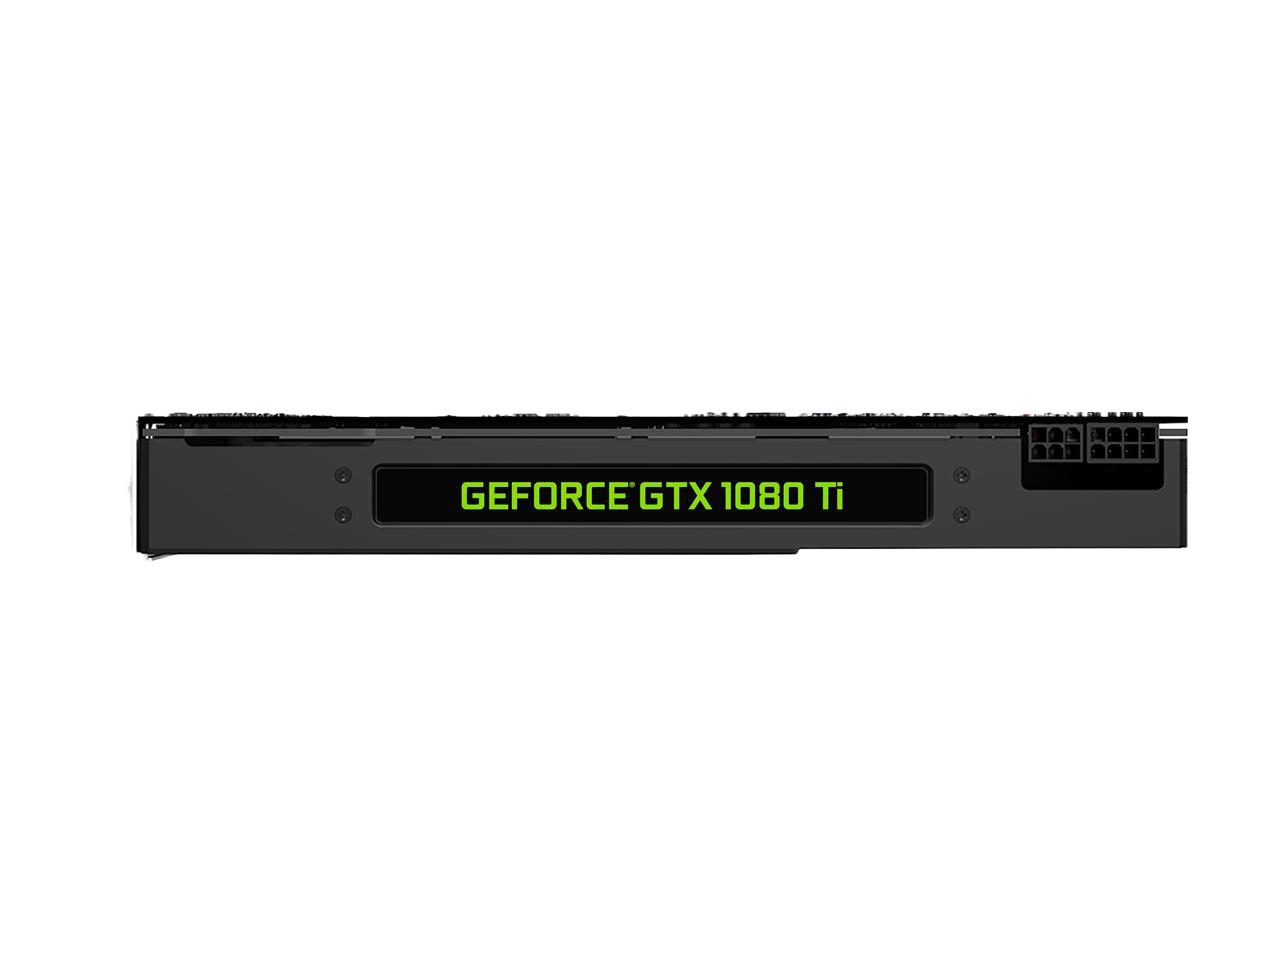 PNY GeForce GTX 1080 Ti Blower Edition 11GB GDDR5X PCI Express 3.0 x16 Video Graphics Card VCGGTX1080T11PB-CG2